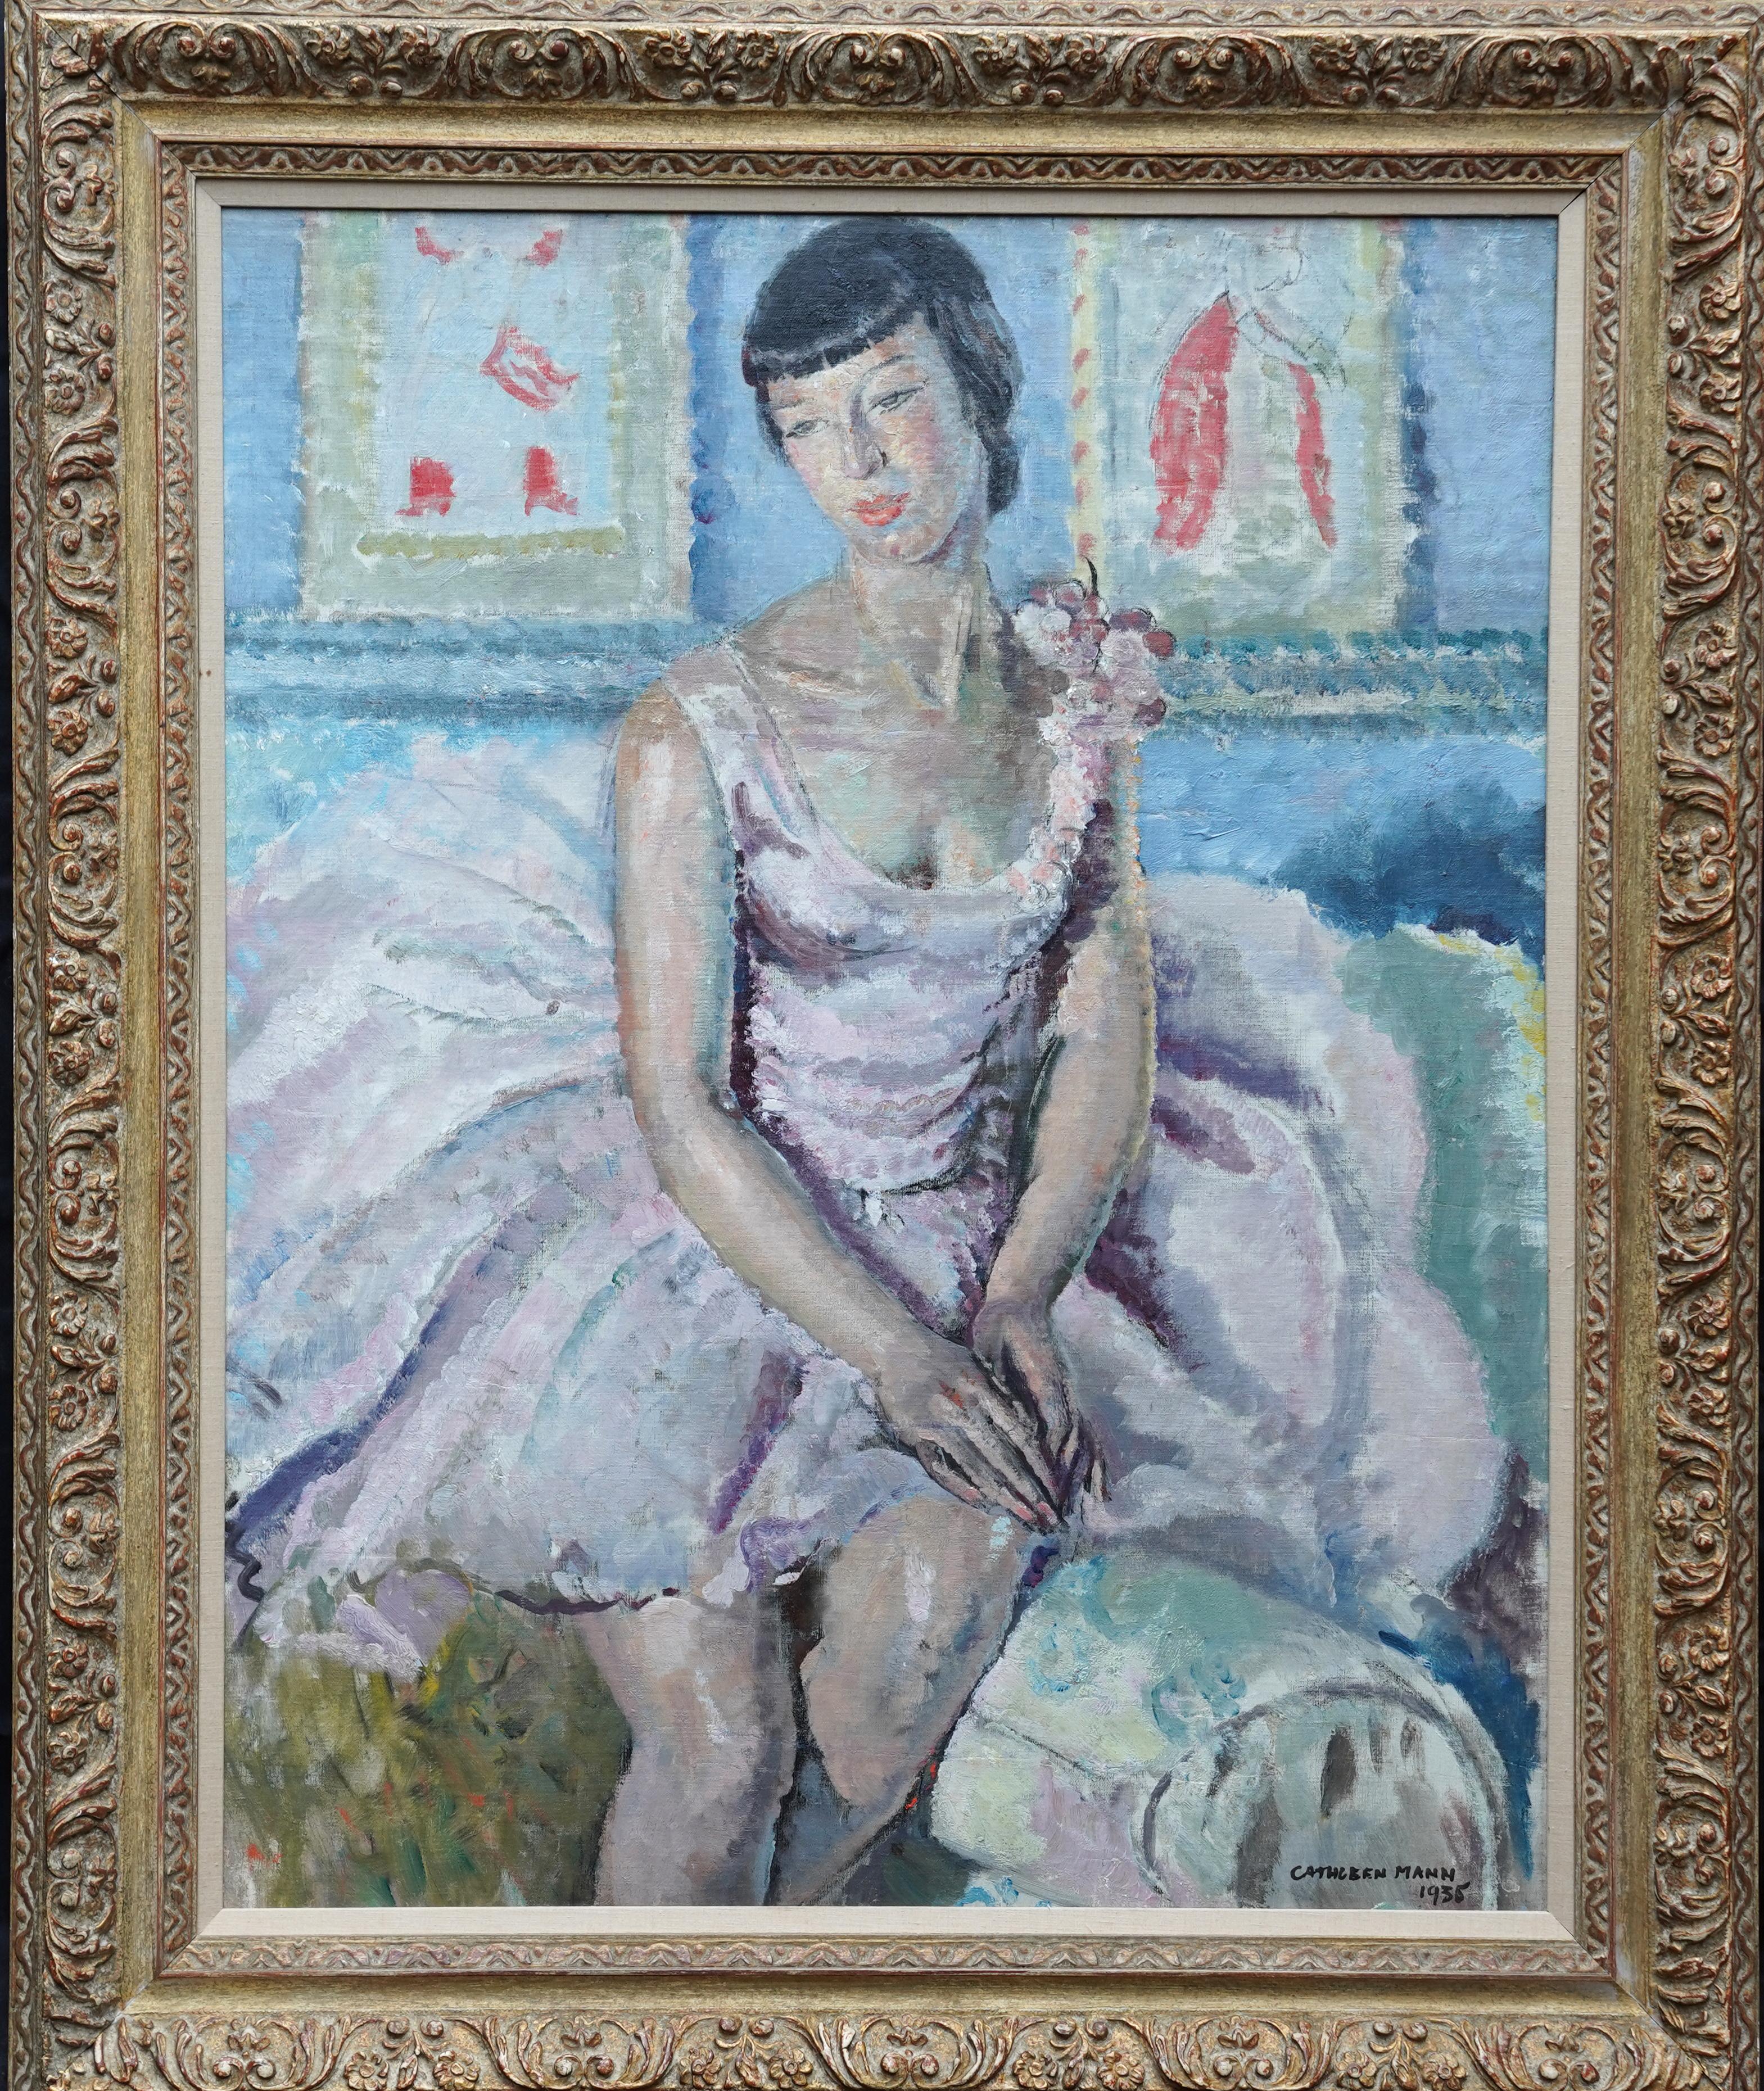 Cathleen Mann Portrait Painting - Portrait of a Ballerina - British 1930's Post Impressionist art oil painting